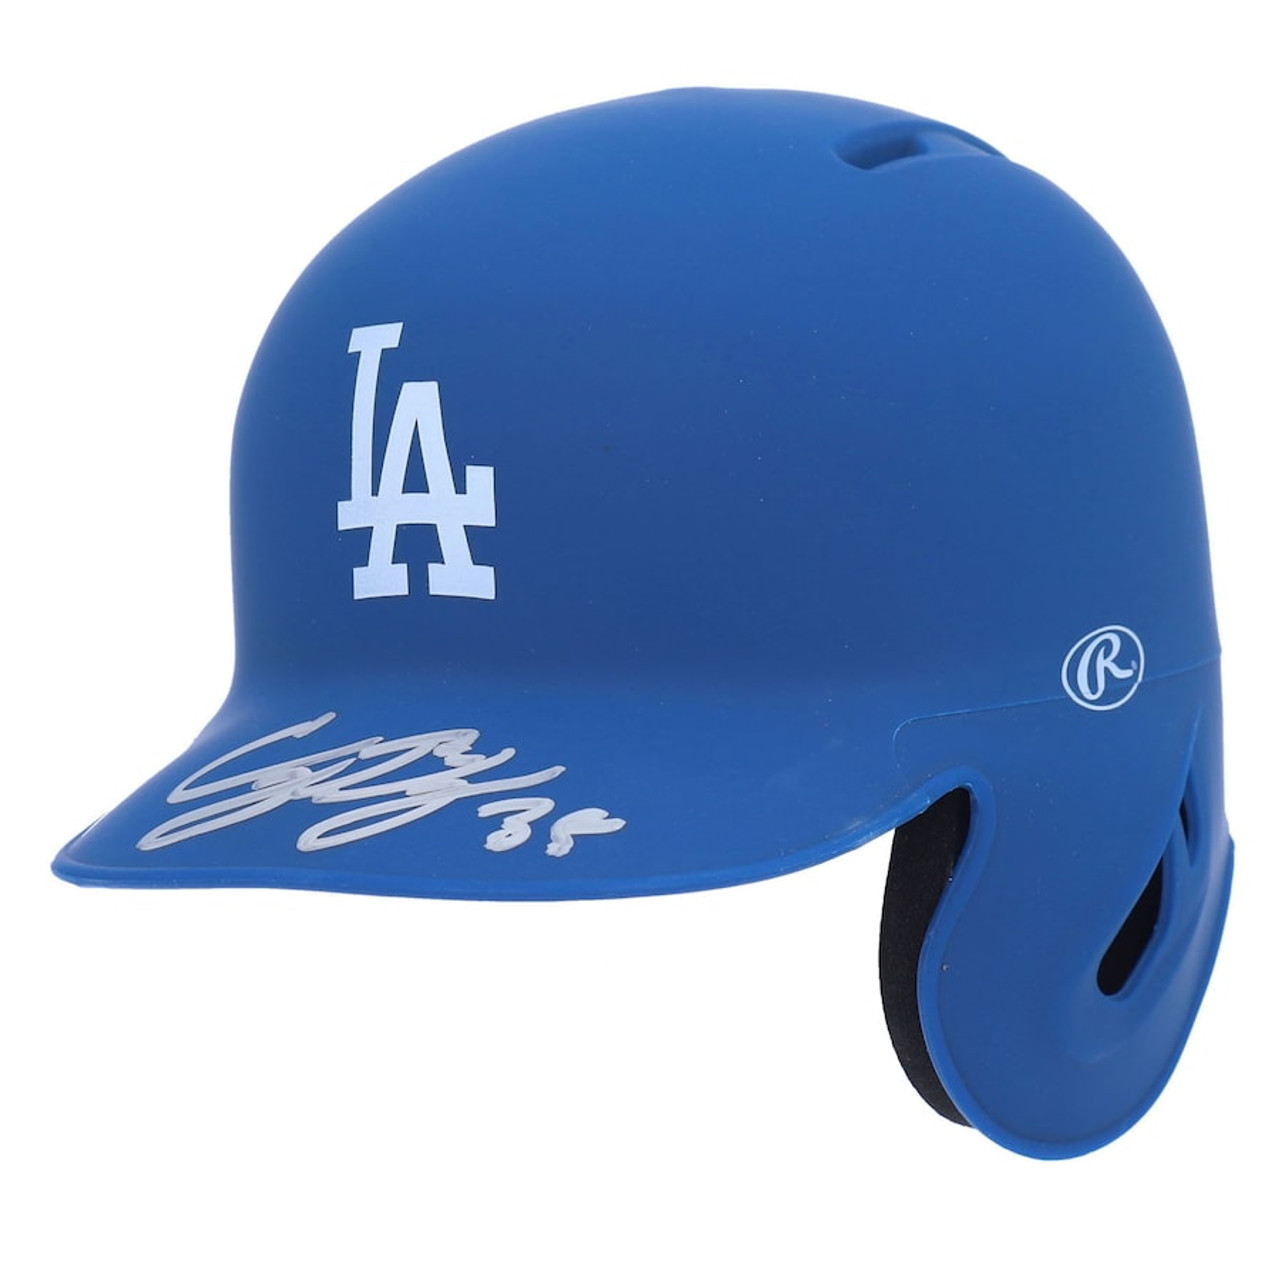 Cody Bellinger Authentic Autographed Los Angeles Dodgers Jersey